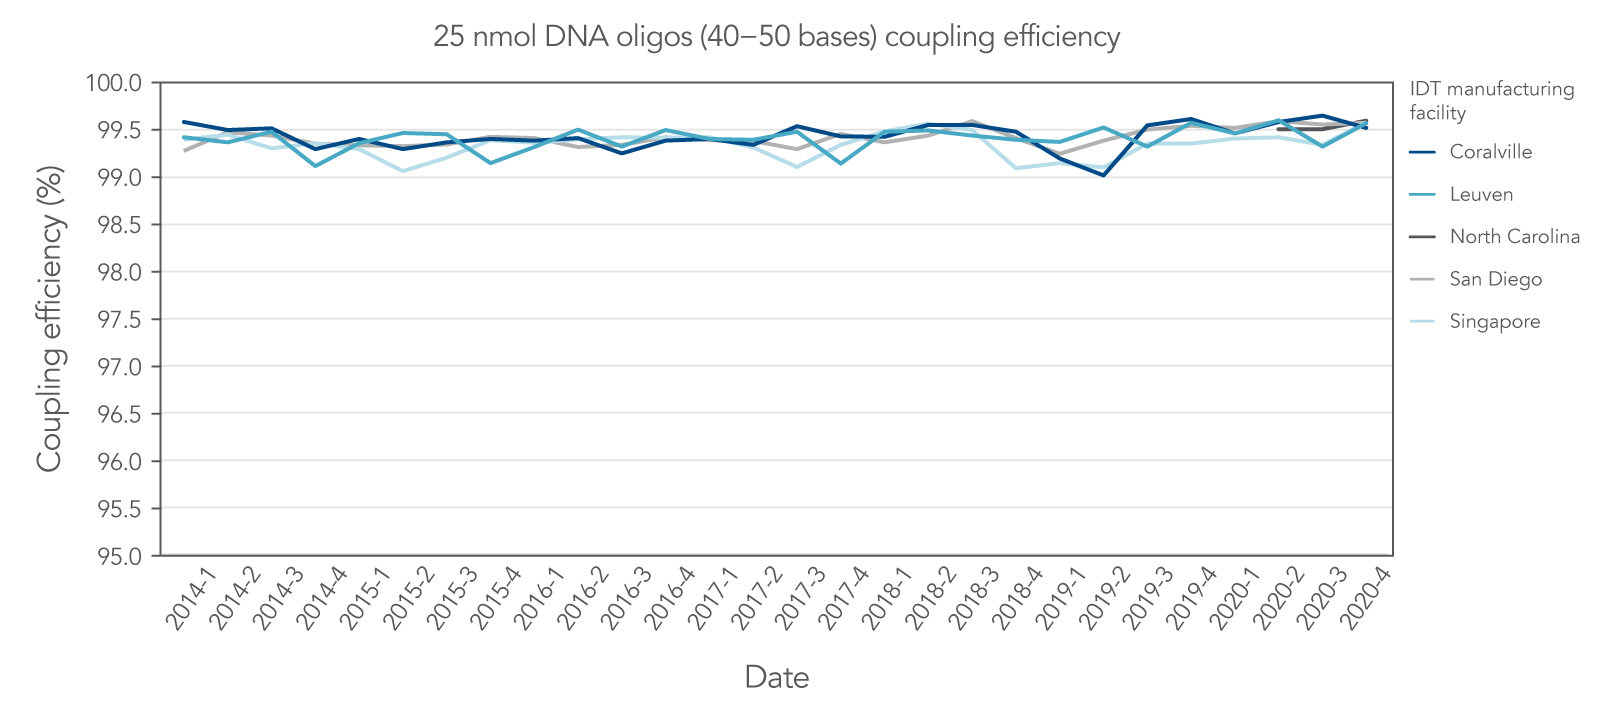 consistent coupling efficiency across sites